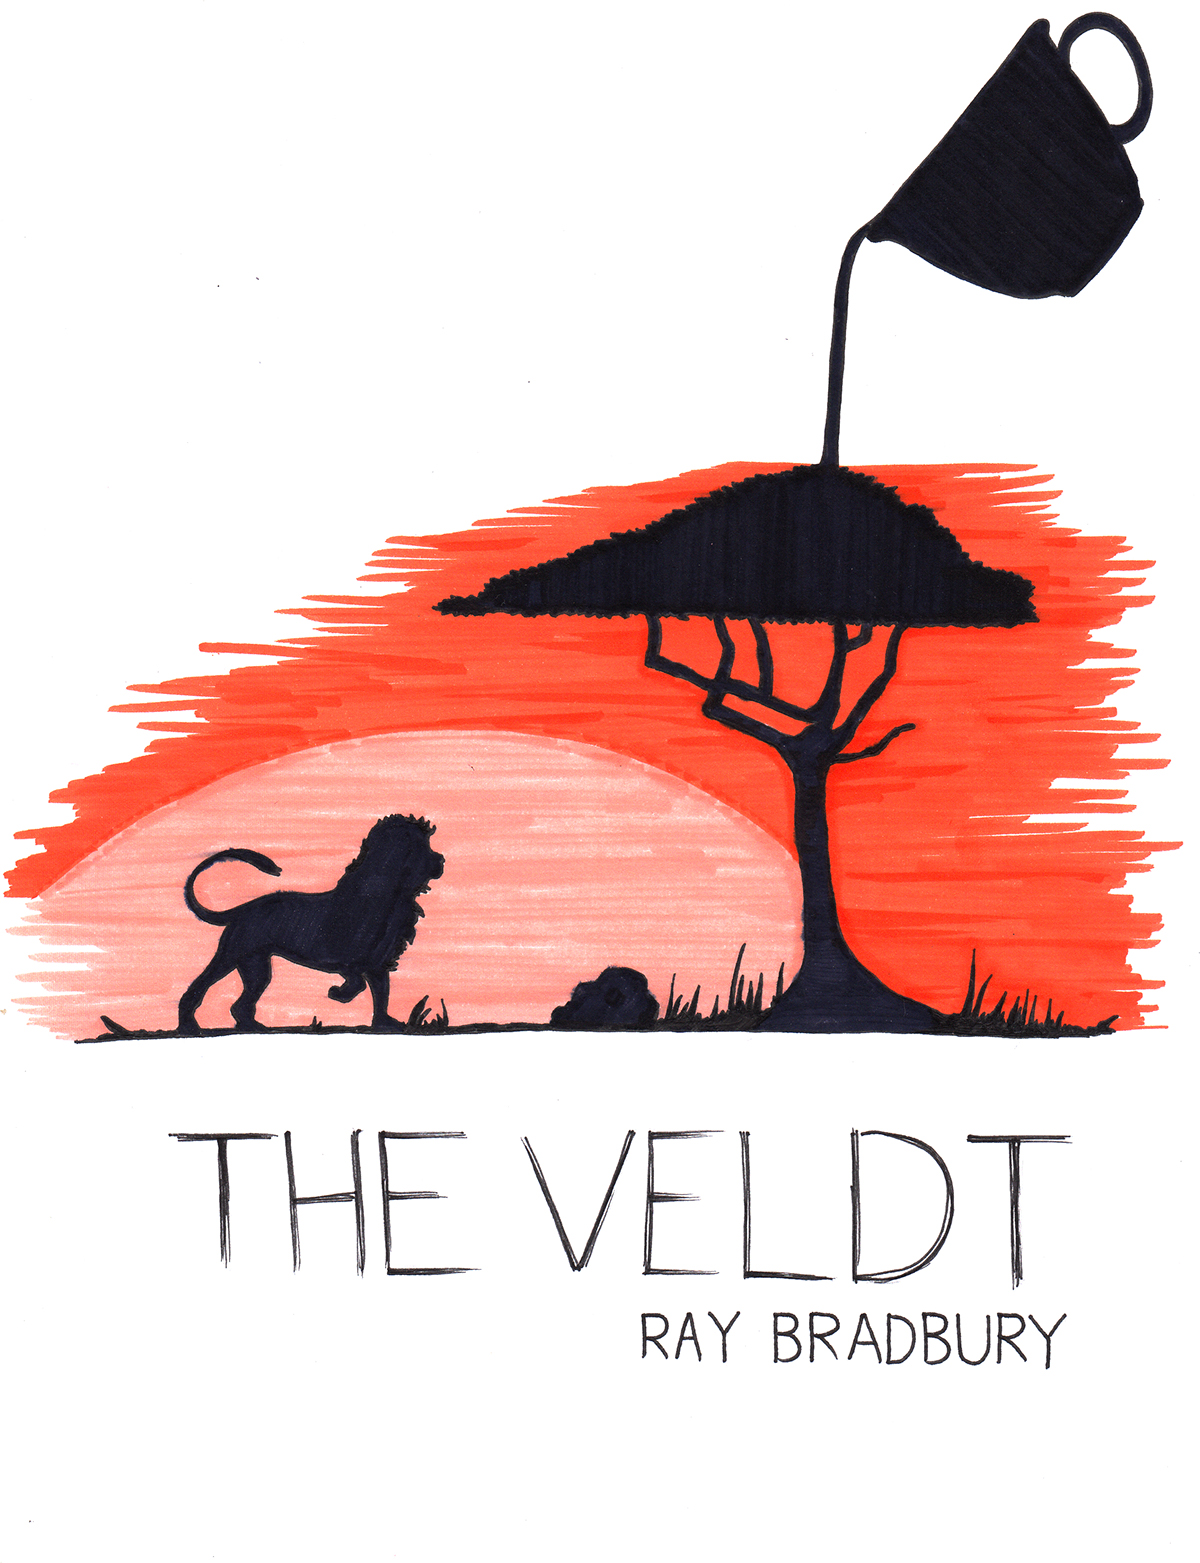 the veldt desert lion vulture tea tragedy short story Ray Bradbury literature World Literature school Project